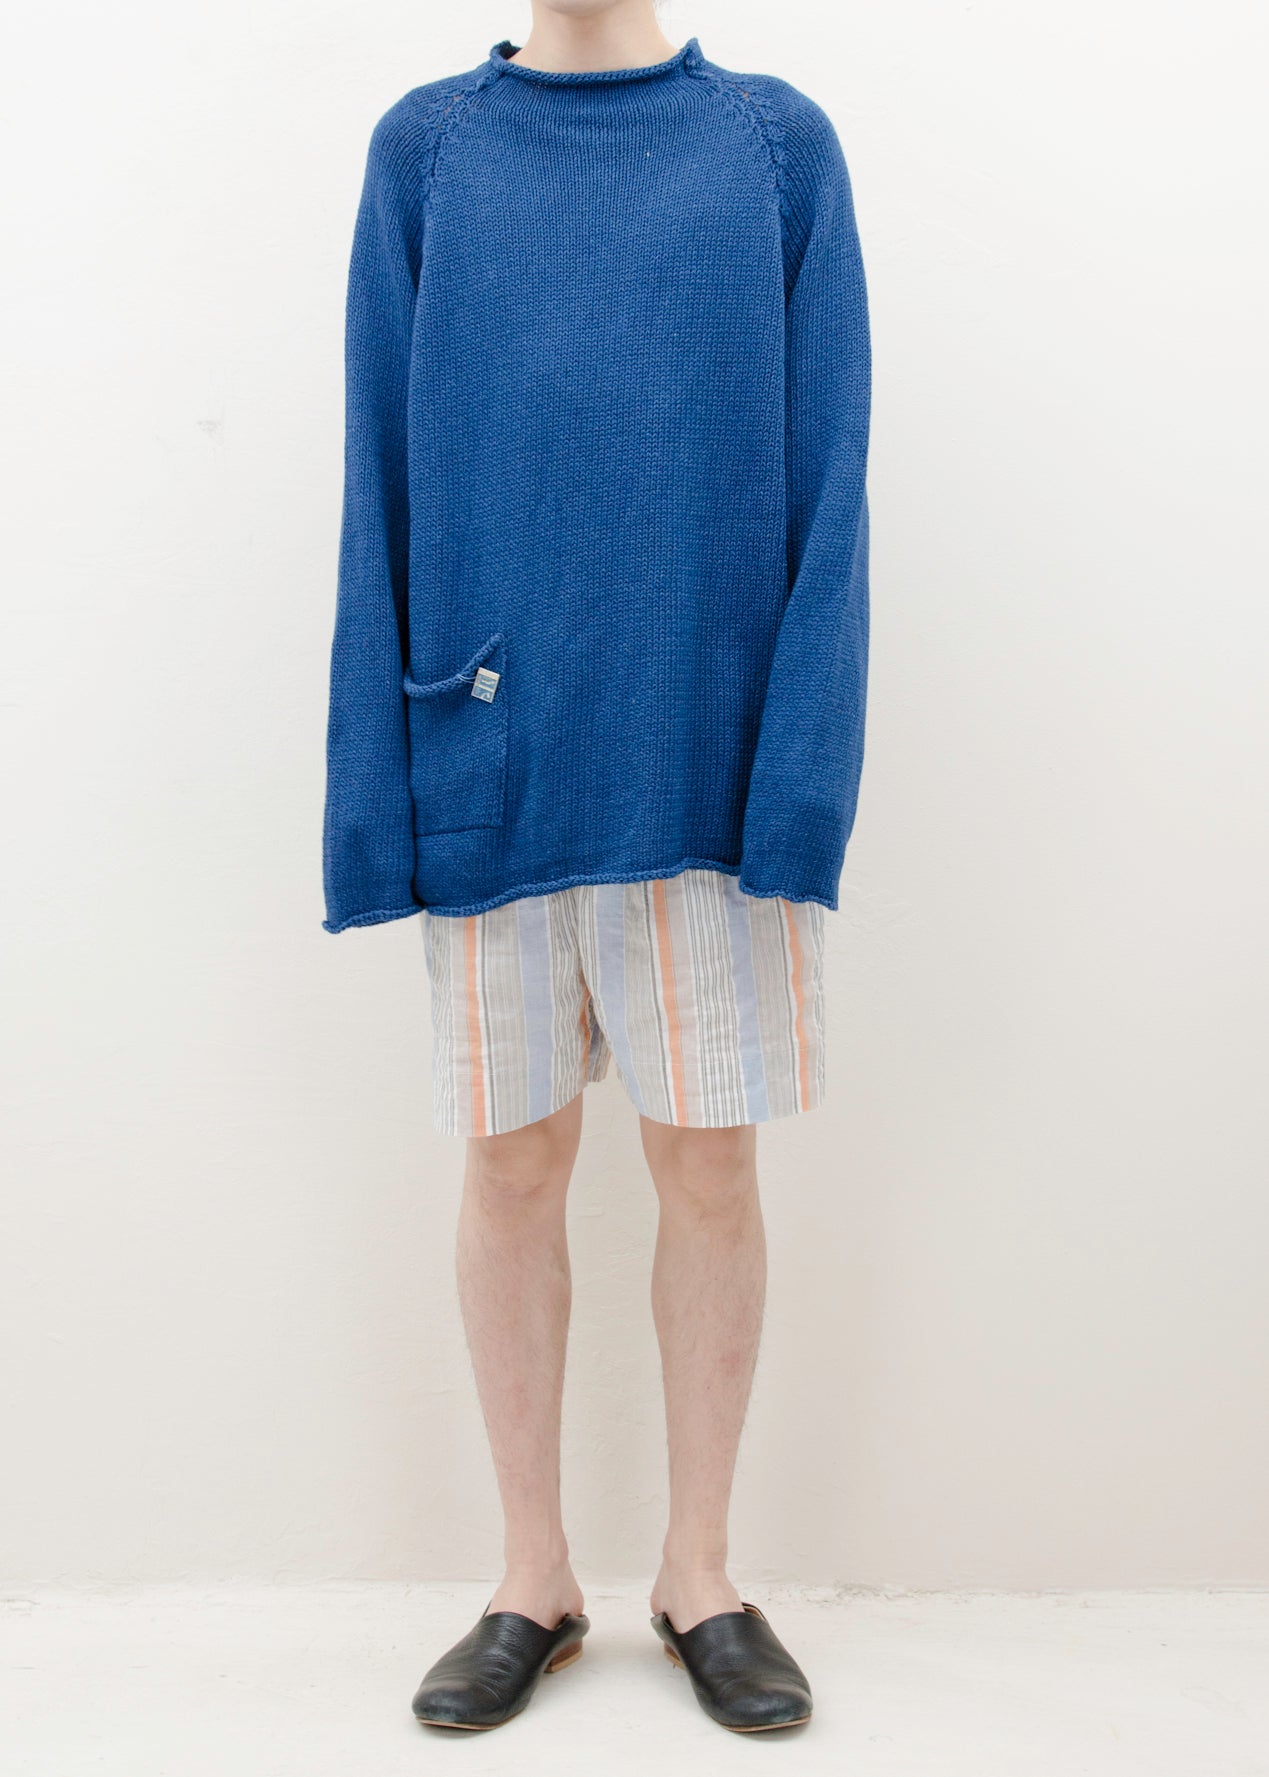 XENIA TELUNTS "Indigo Blue Fisherman Sweater"